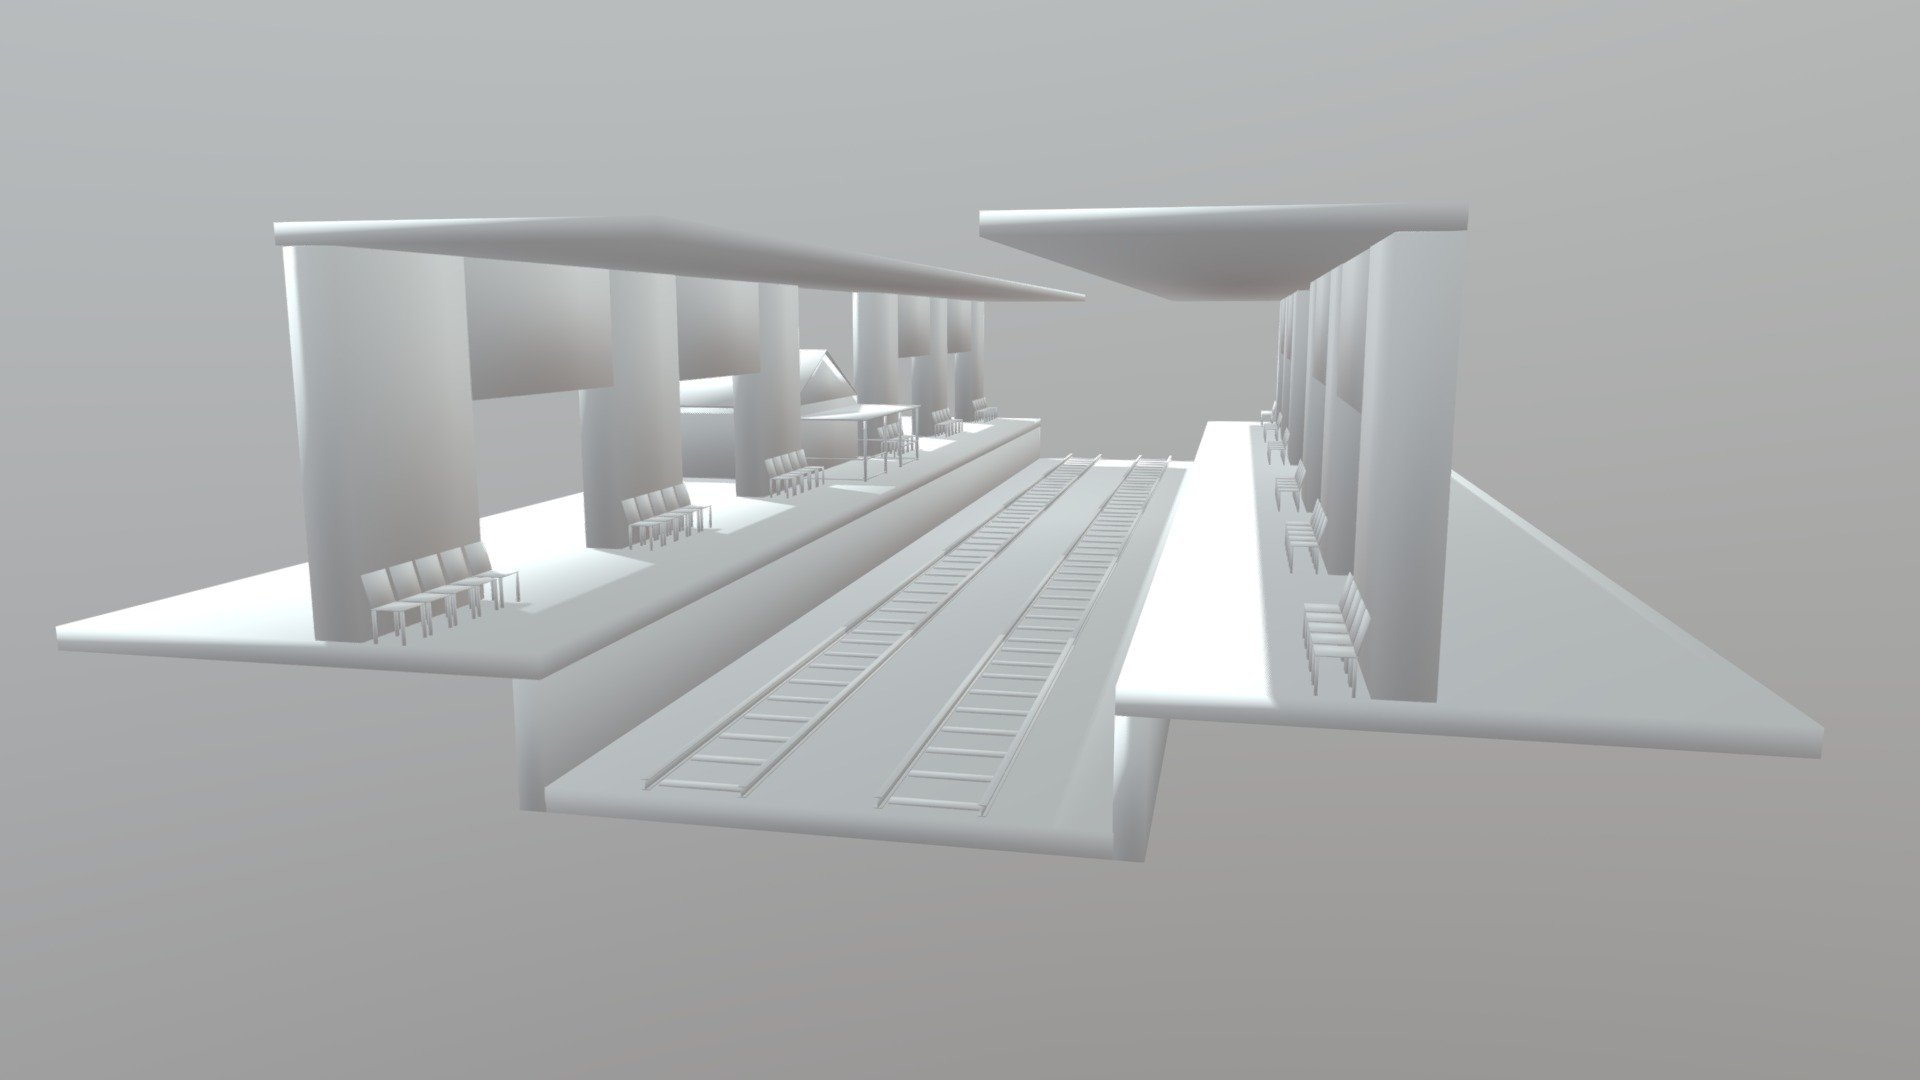 Primitive model train station.
Train house.
Train tracks.
Platforms.
Chairs.
Half roof 3d model